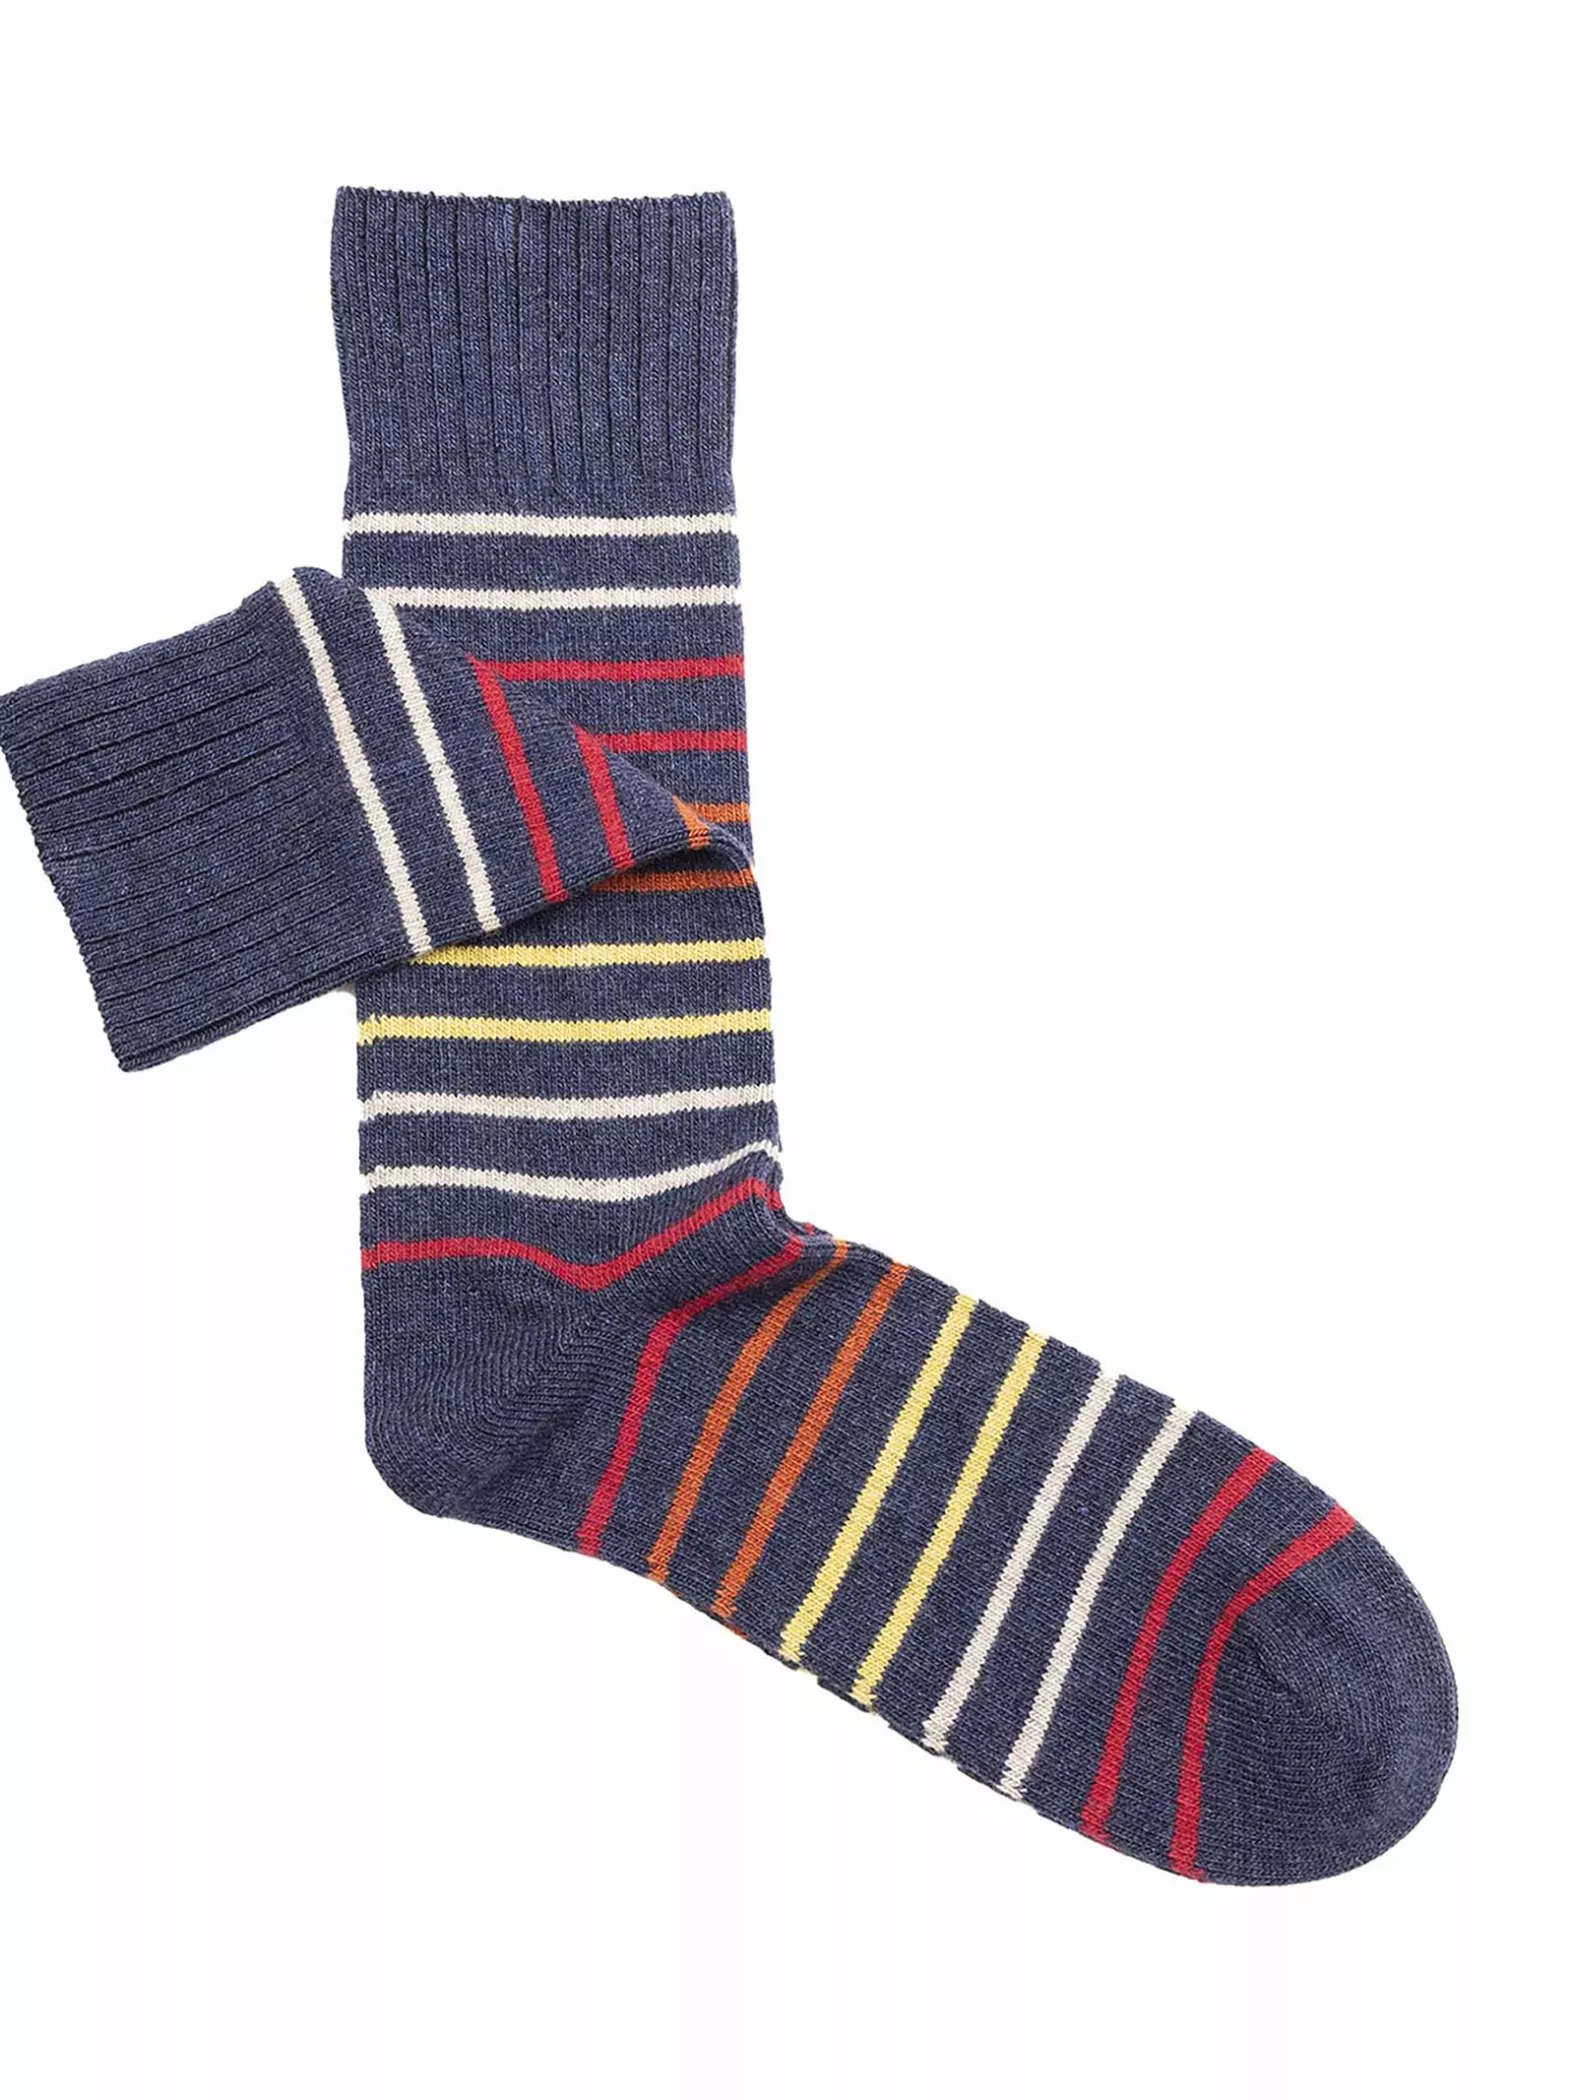 Short Cashmere Viscose Socks in Striped Pattern